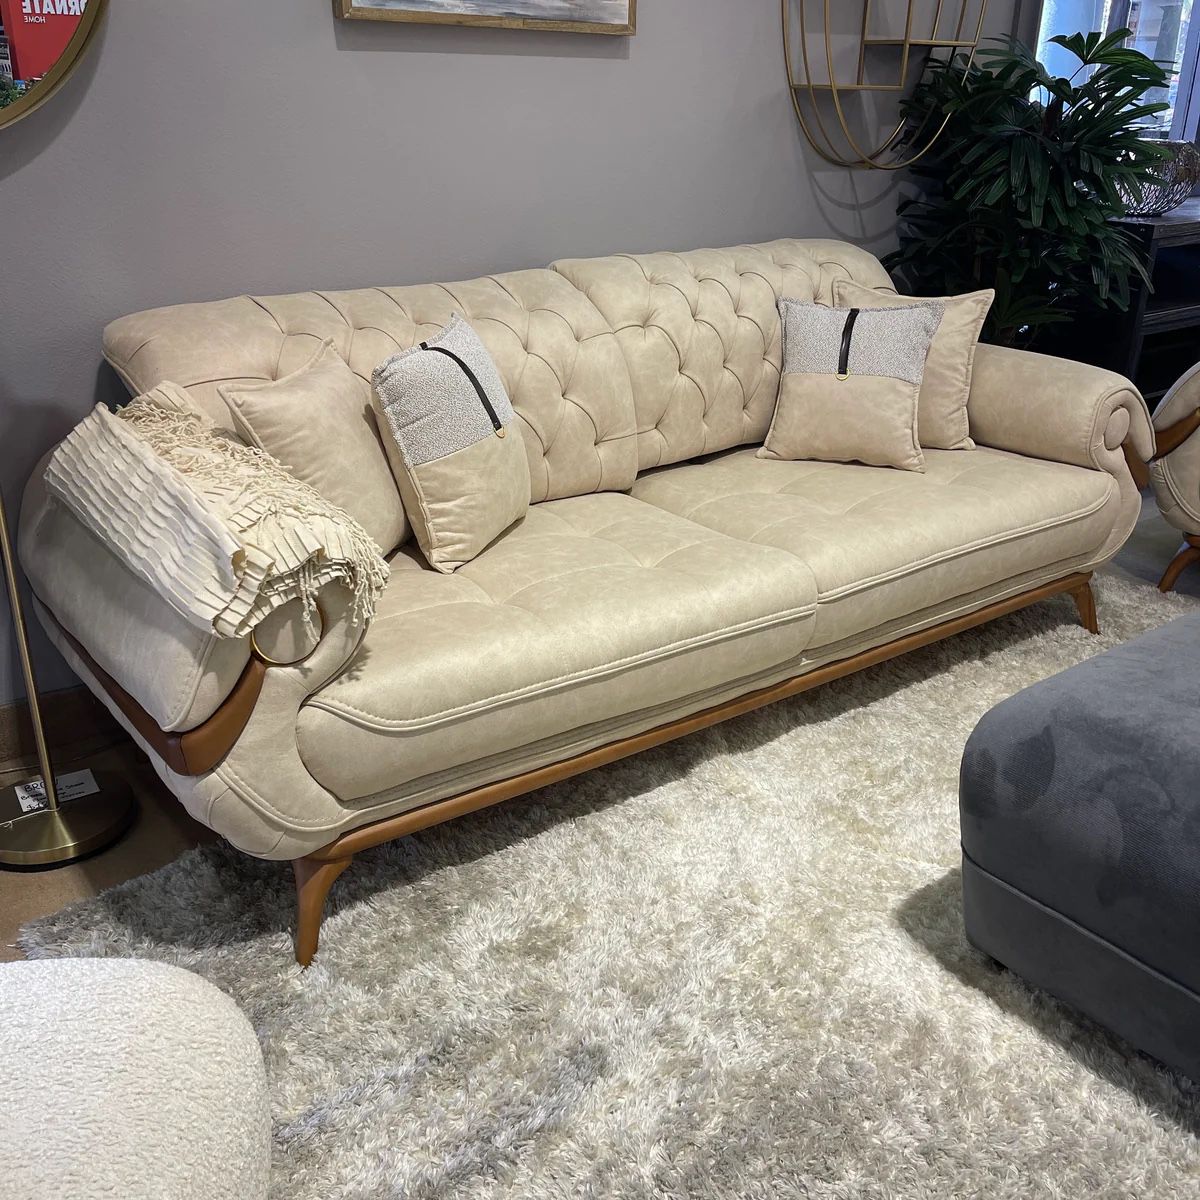 HOT SALE] 🔥 Boston Cream Sofa & Loveseat 2pc Set Comfortable Contemporary Couch